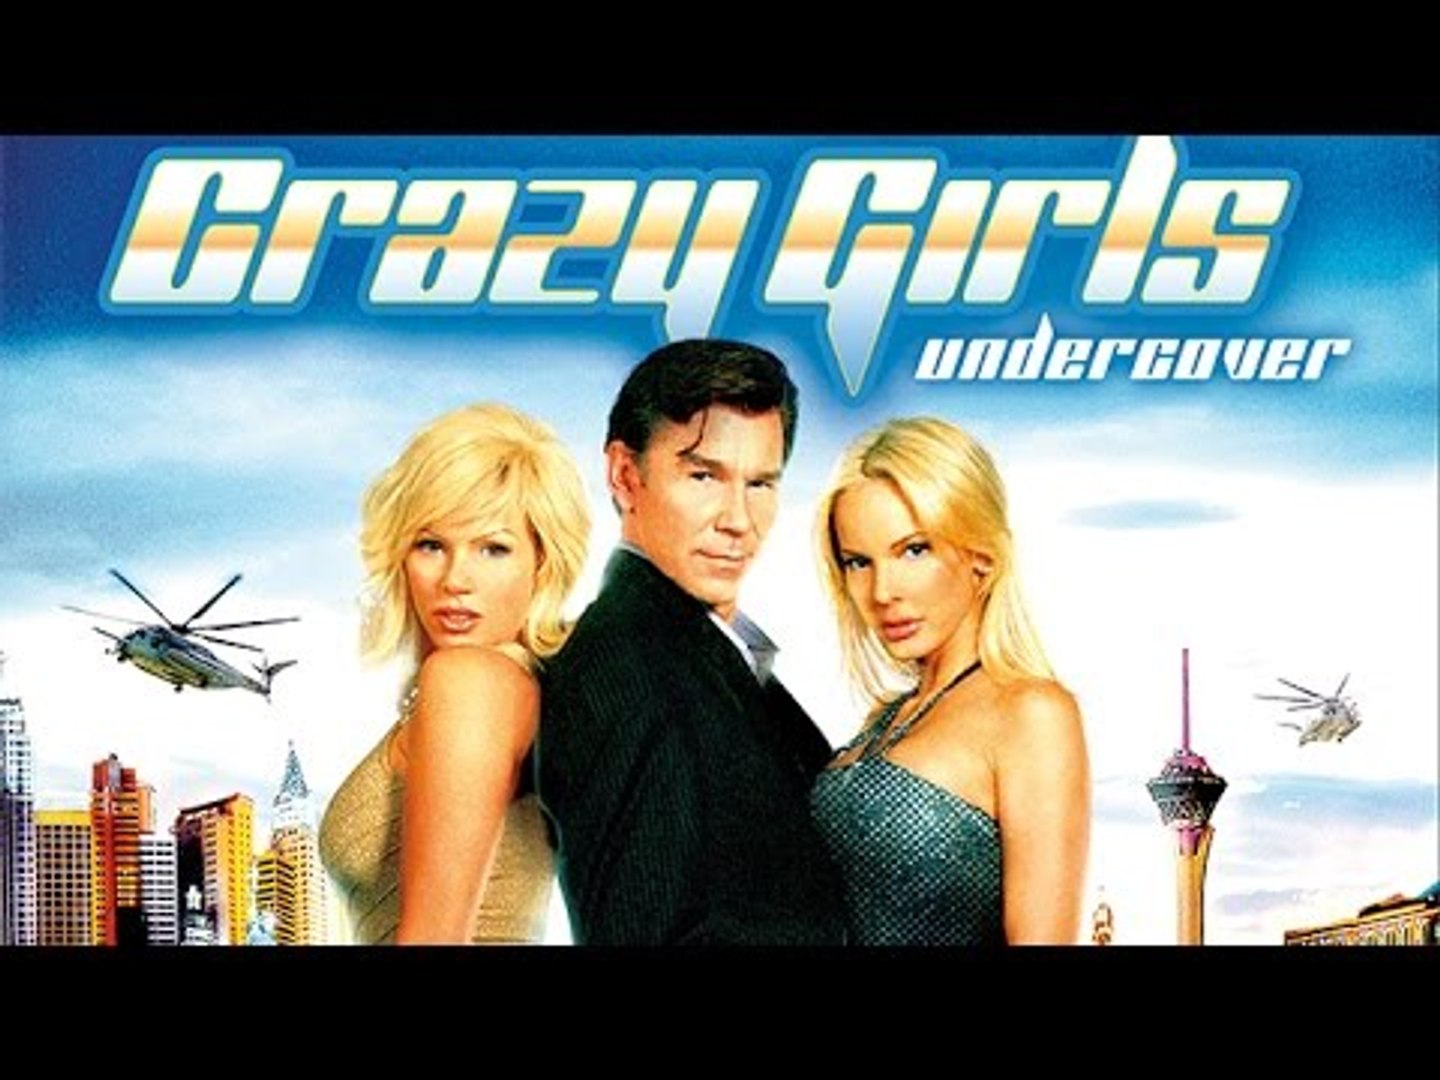 Crazy Girls Under Cover - Free Thriller Movie - video Dailymotion